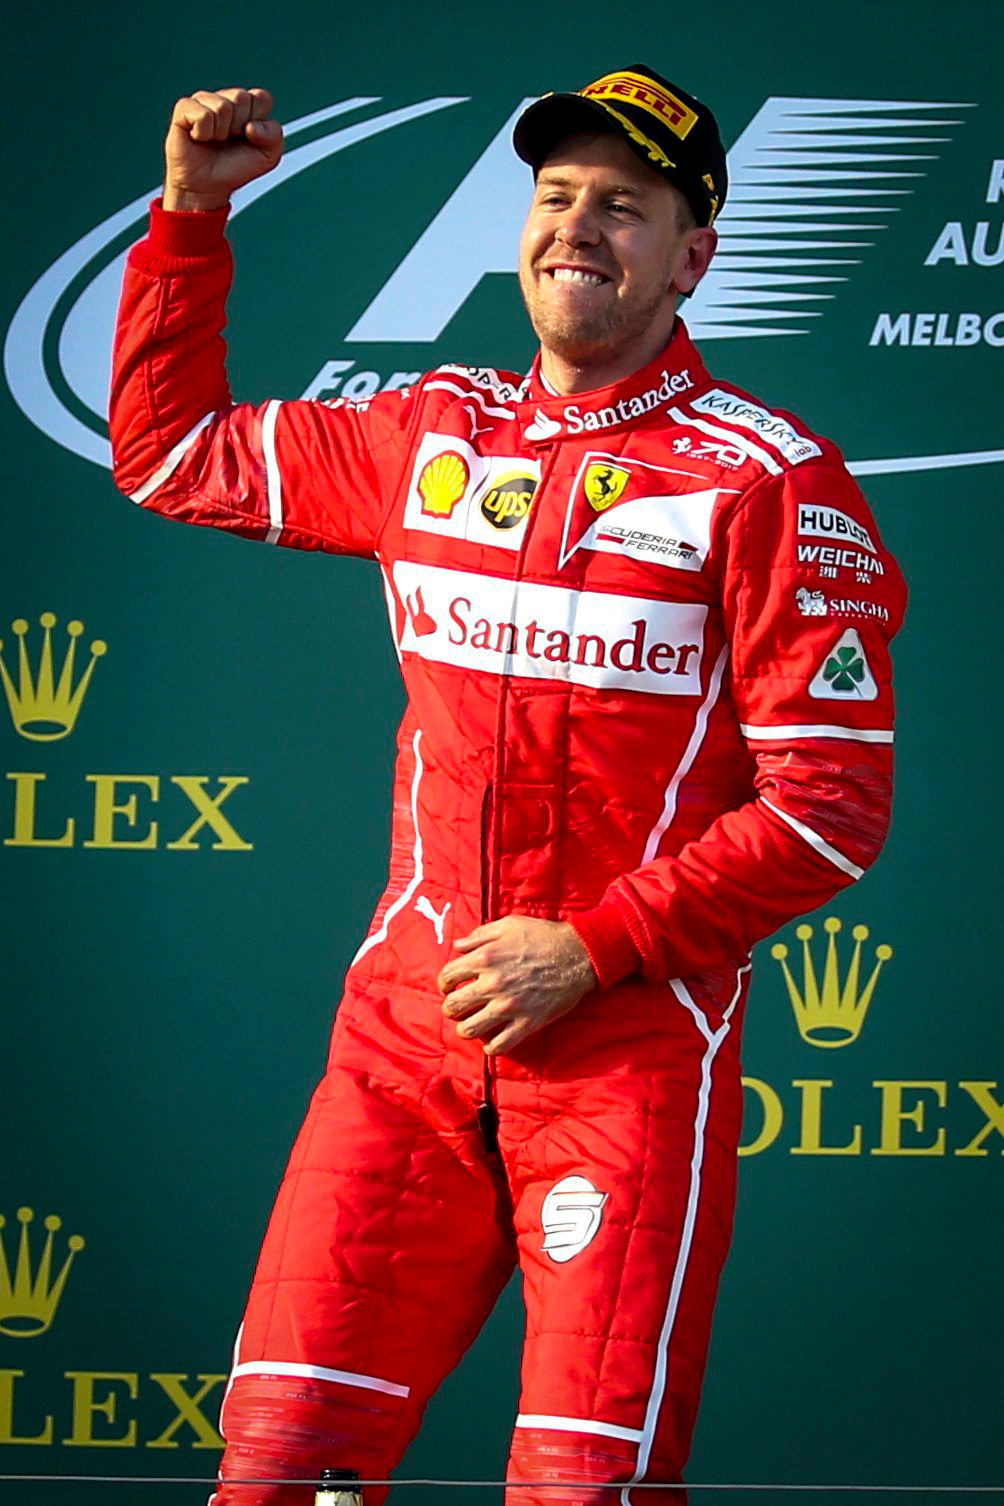 epa05871257 German Formula One driver Sebastian Vettel of Scuderia Ferrari celebrates on the podium after winning the 2017 Formula One Grand Prix of Australia at the Albert Park circuit in Melbourne, Australia, 26 March 2017.  EPA/DIEGO AZUBEL AUSTRALIA FORMULA ONE GRAND PRIX